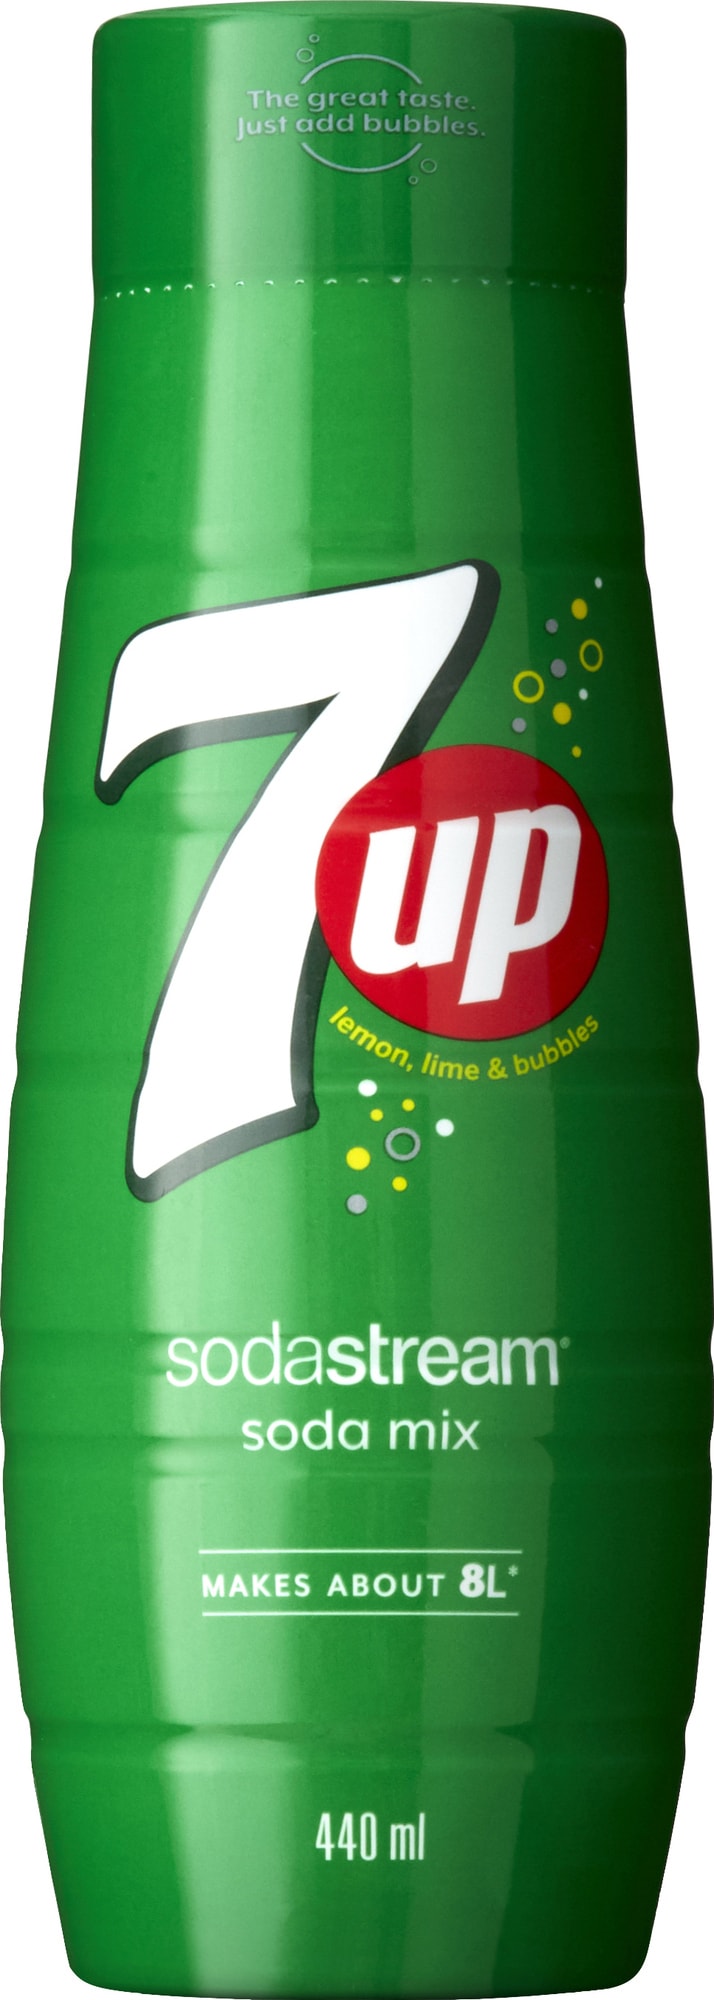 Sodastream 7 UP-smag 1100007770